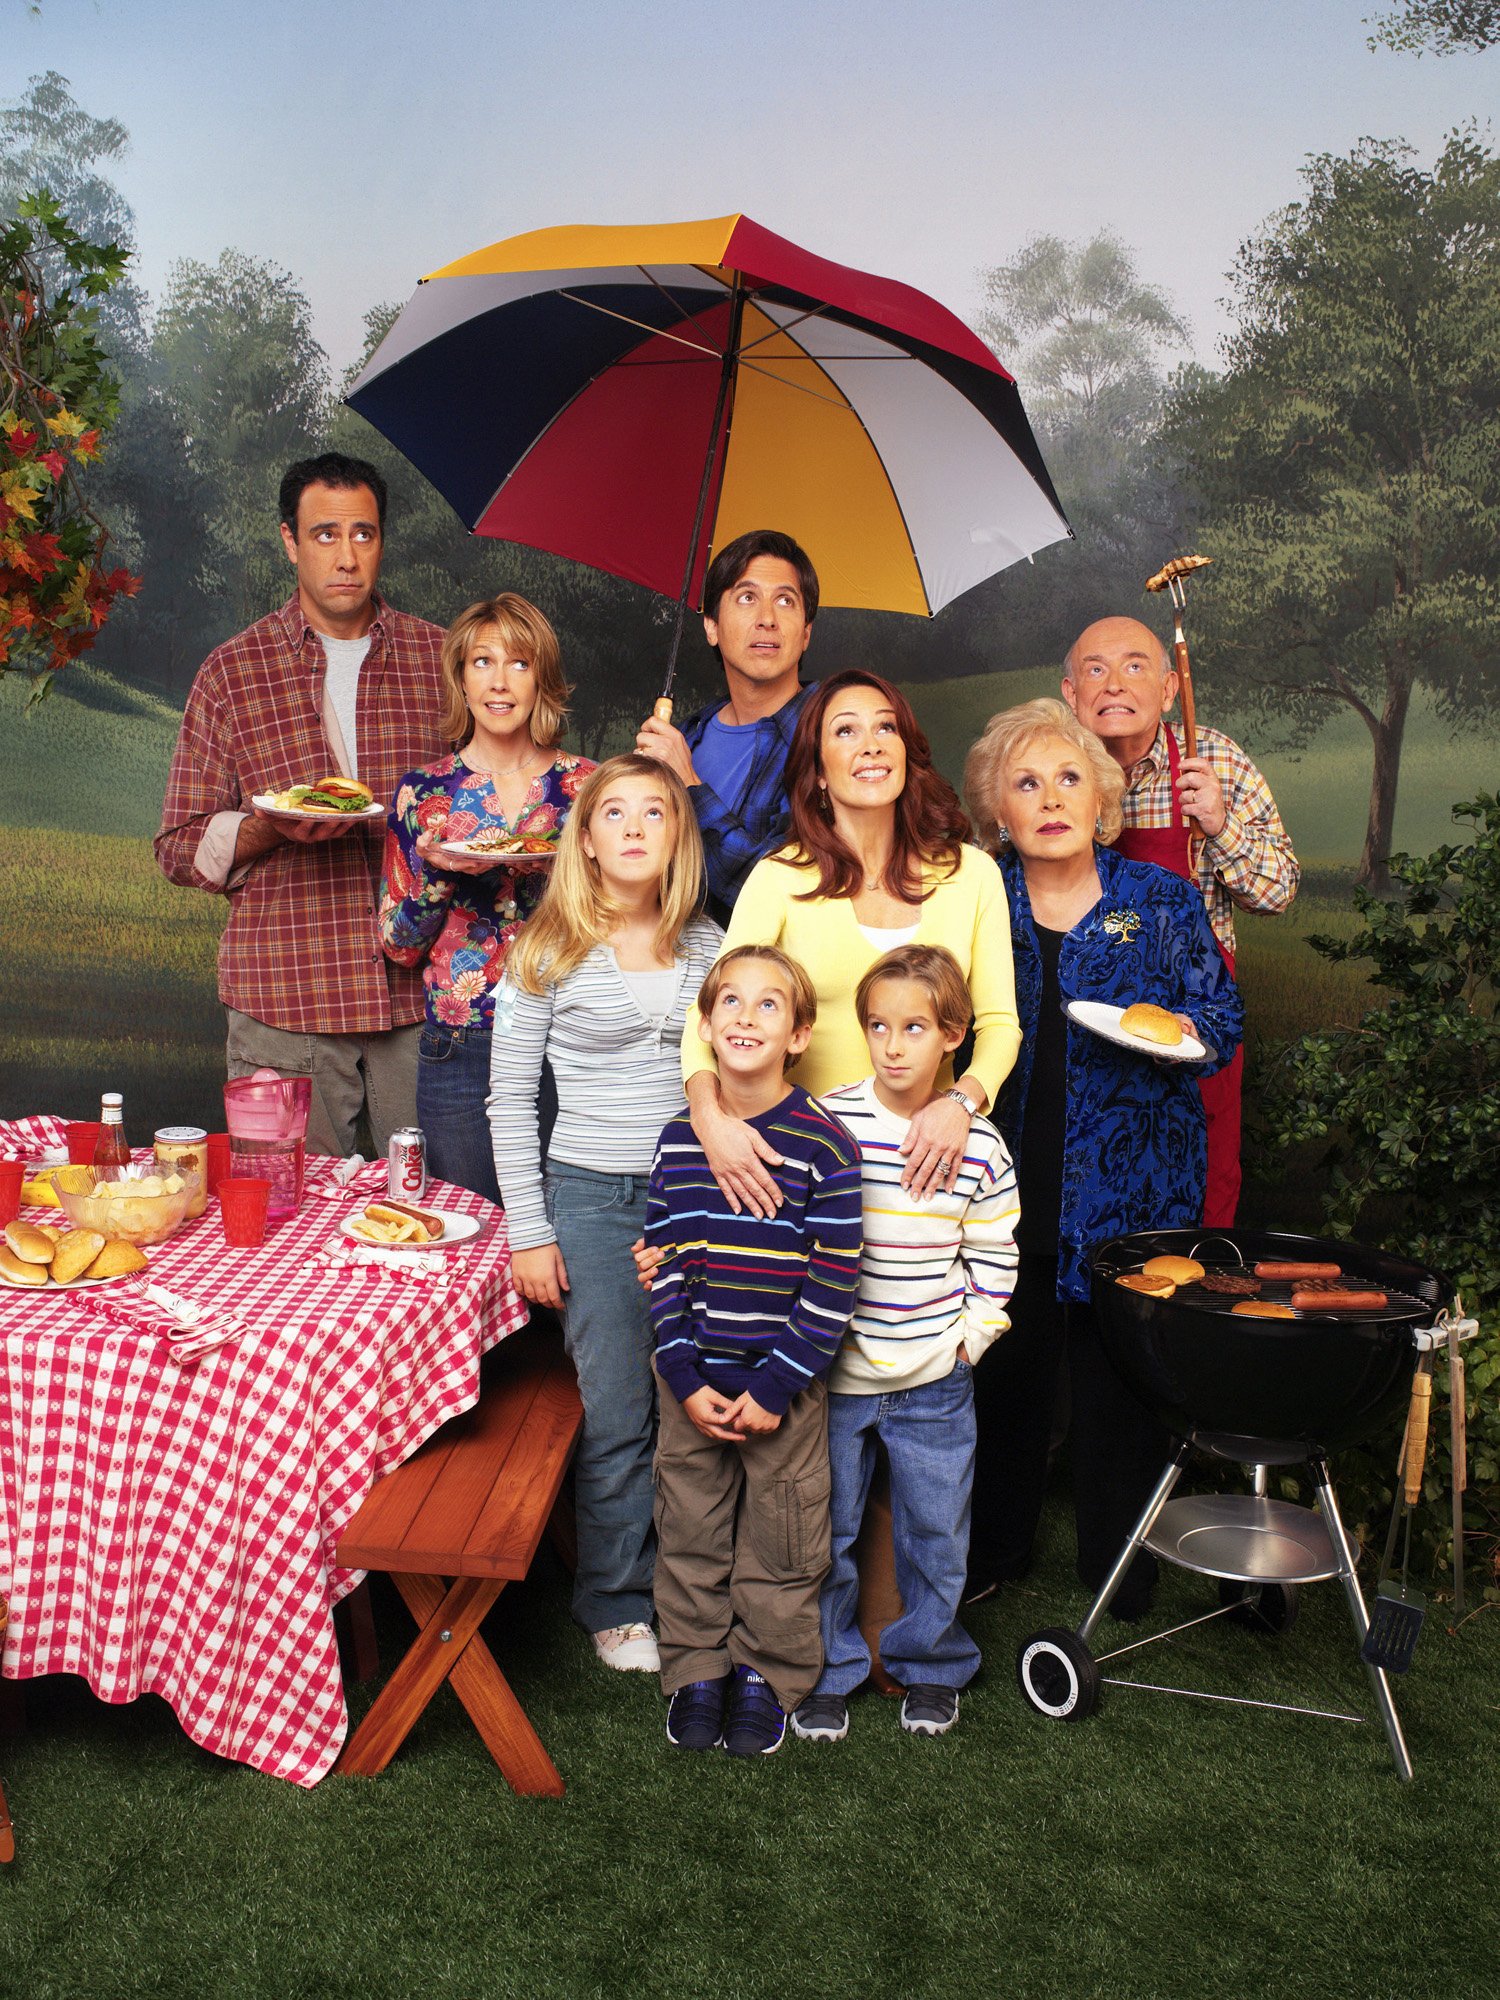 'Everybody Loves Raymond' cast photo with (left to right): Brad Garrett, Monica Horan, Madylin Sweeten, Sawyer Sweeten, Sullivan Sweeten, Ray Romano, Patricia Heaton, Doris Roberts, and Peter Boyle